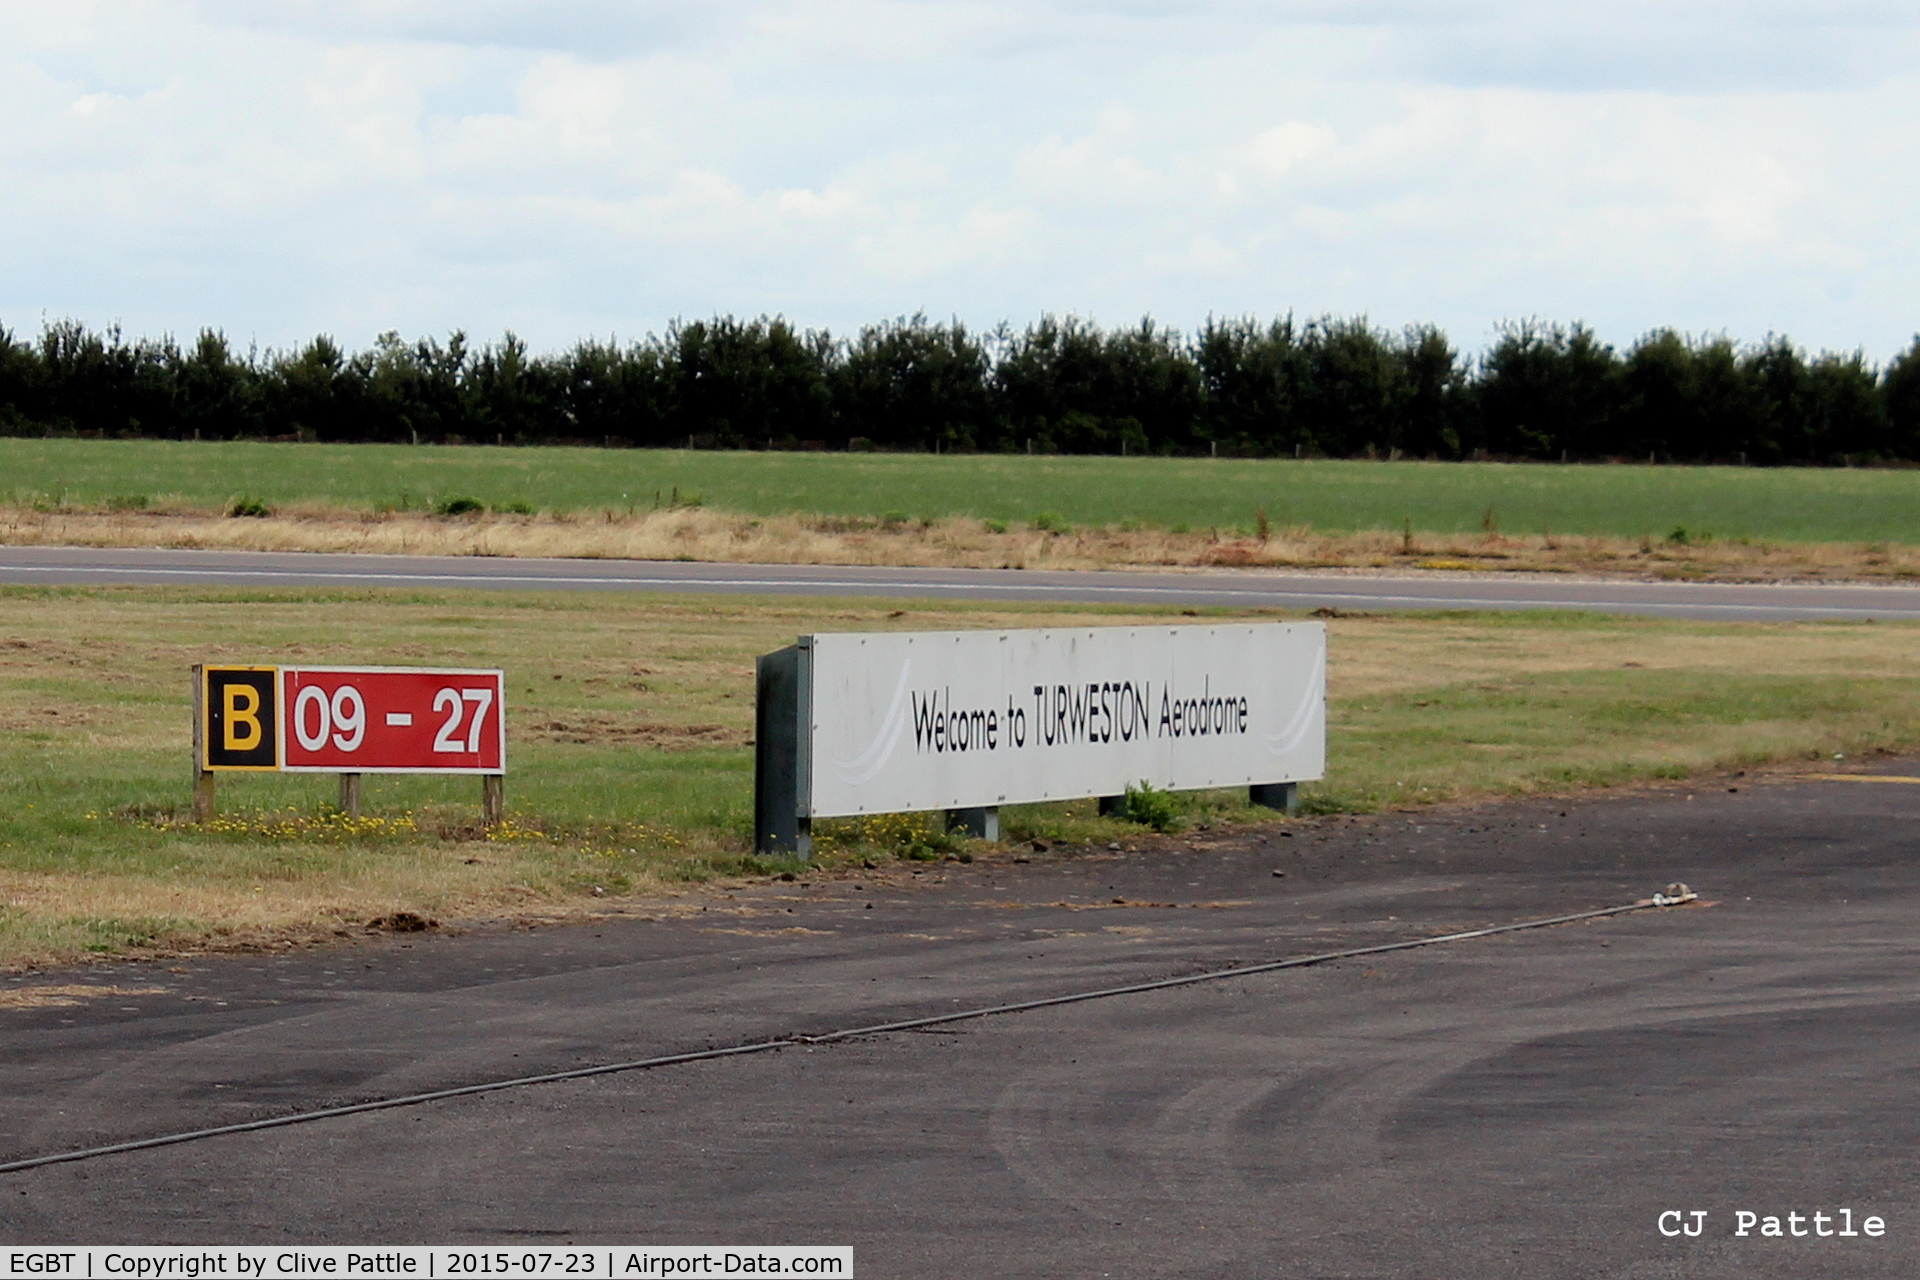 Turweston Aerodrome Airport, Turweston, England United Kingdom (EGBT) - A welcoming sign for visiting aviators at Turweston EGBT